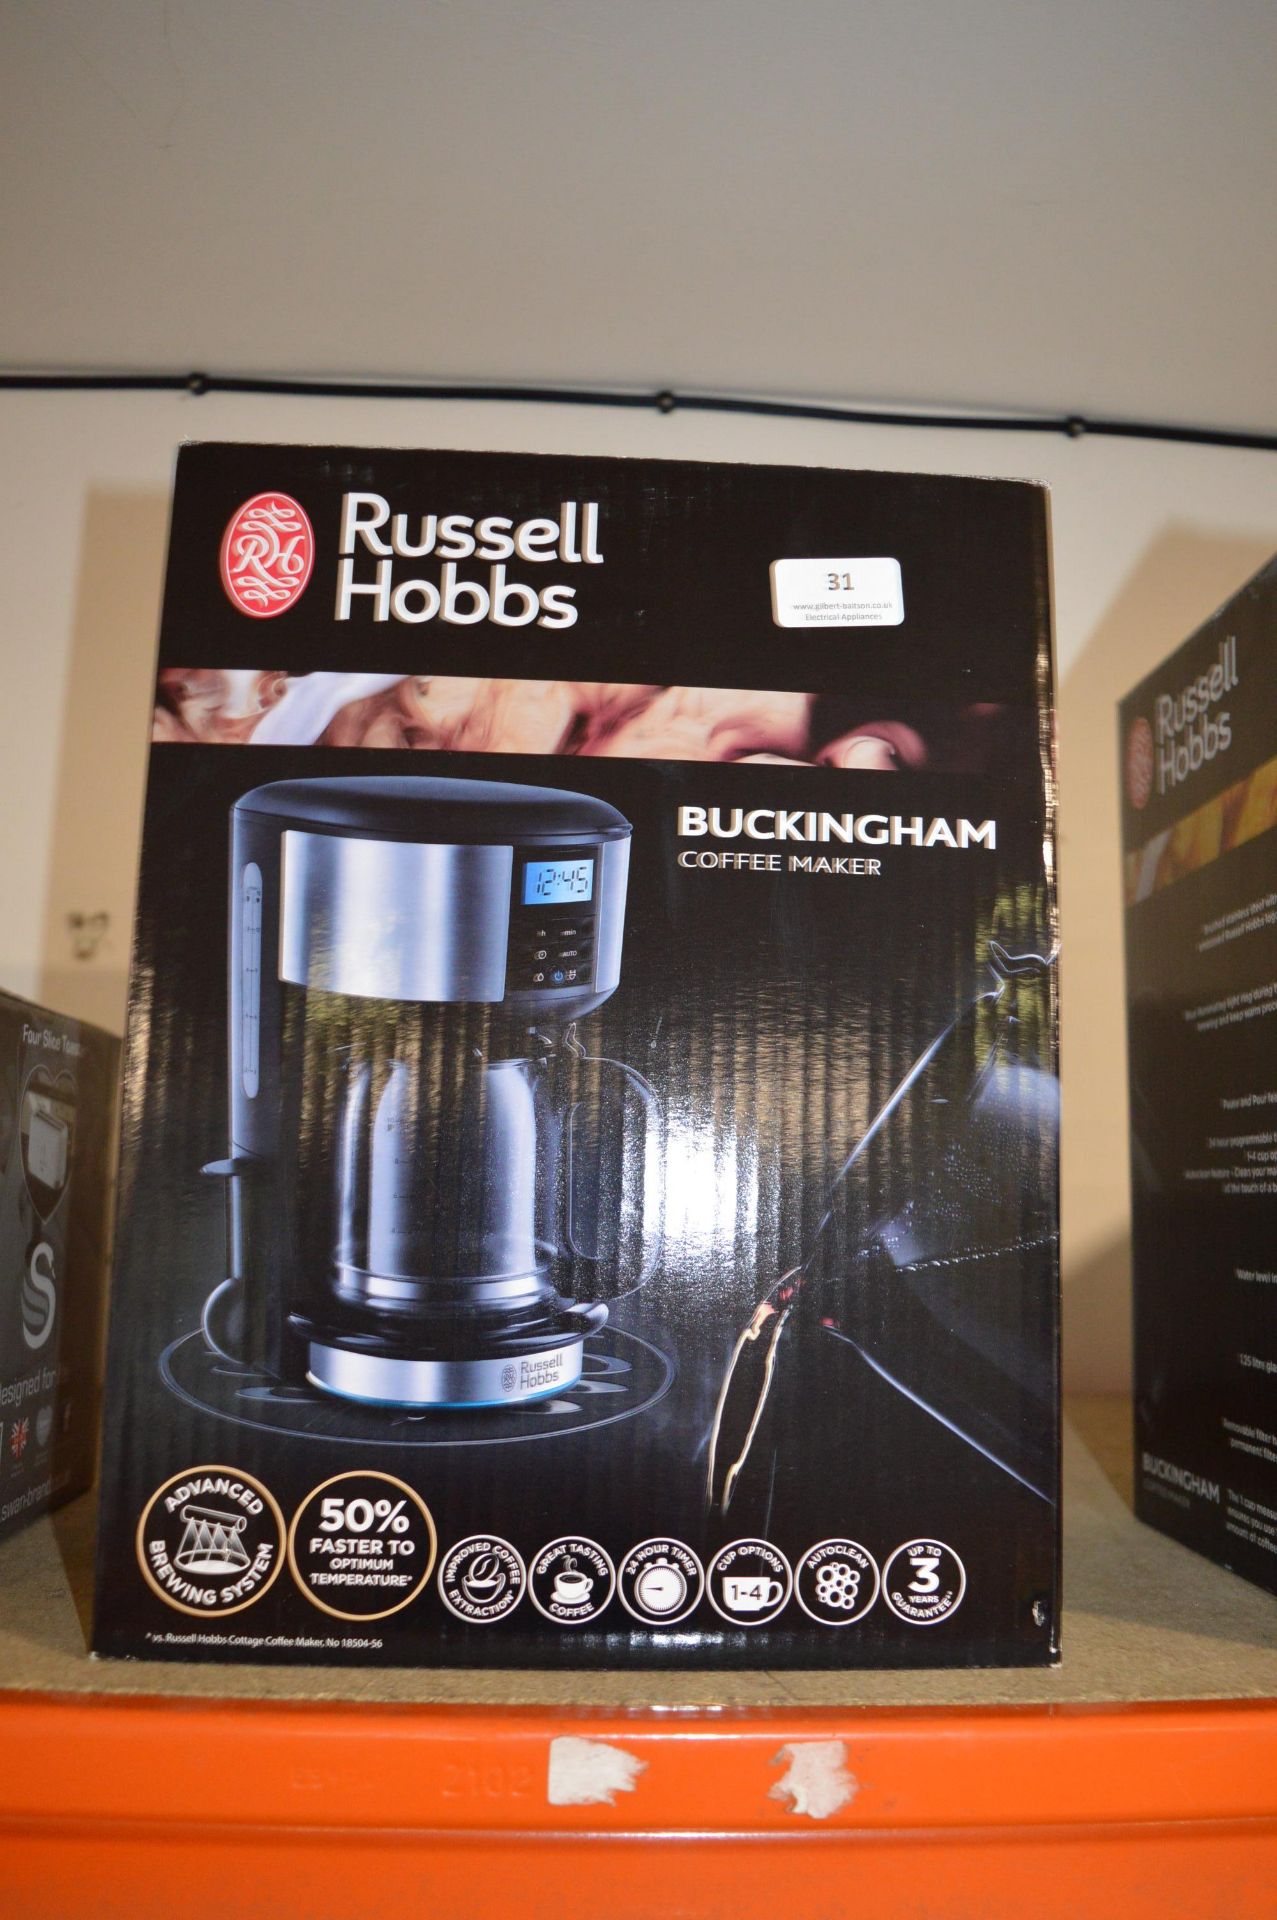 *Russell Hobbs Buckingham Coffee Maker